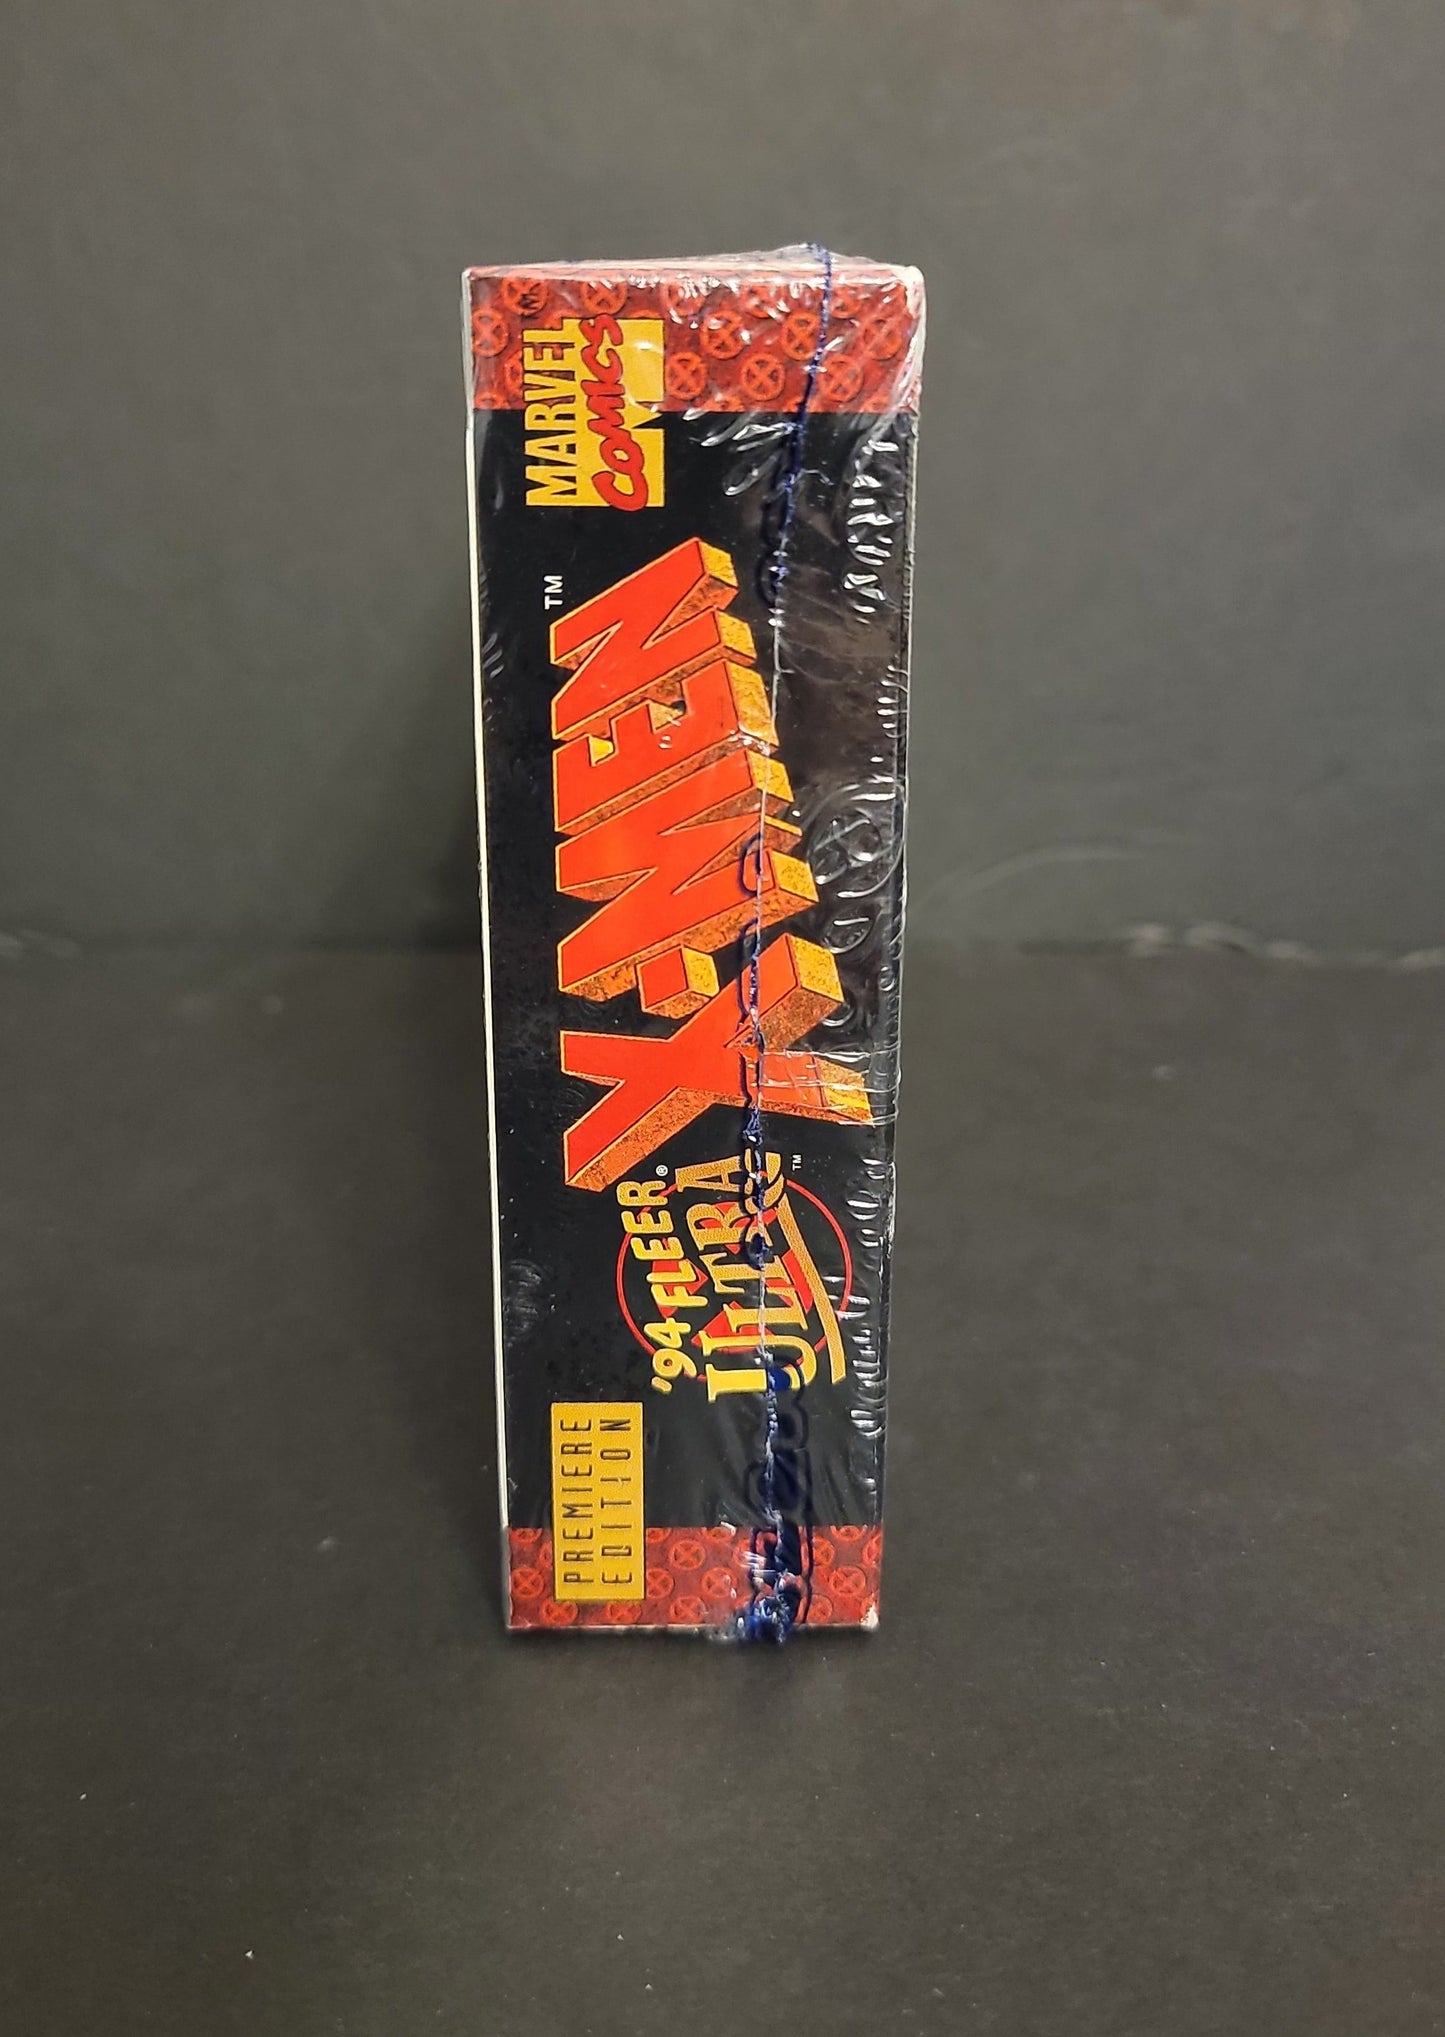 1994 Fleer Ultra X-MEN Premiere Edition FACTORY SEALED Box - 36pks Unopened